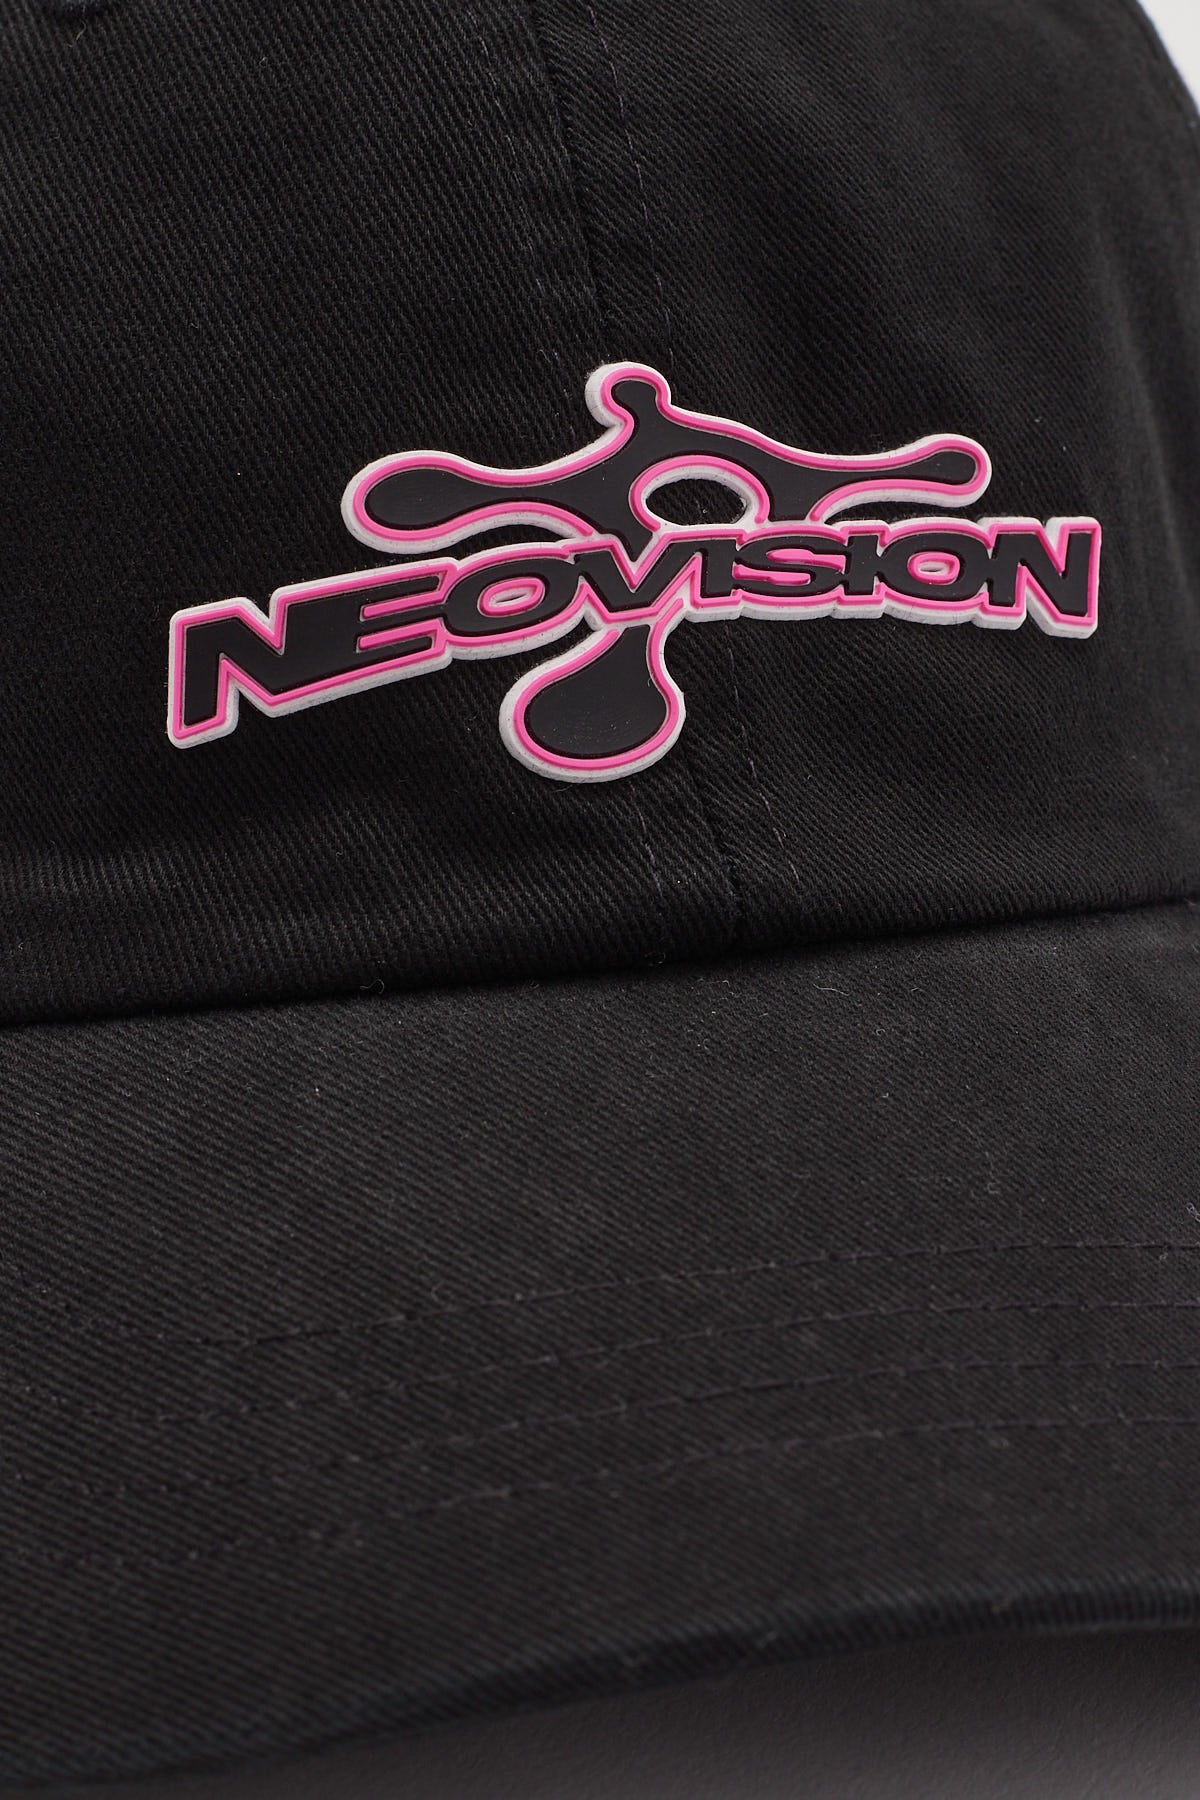 Neovision Splat Dad Cap Black